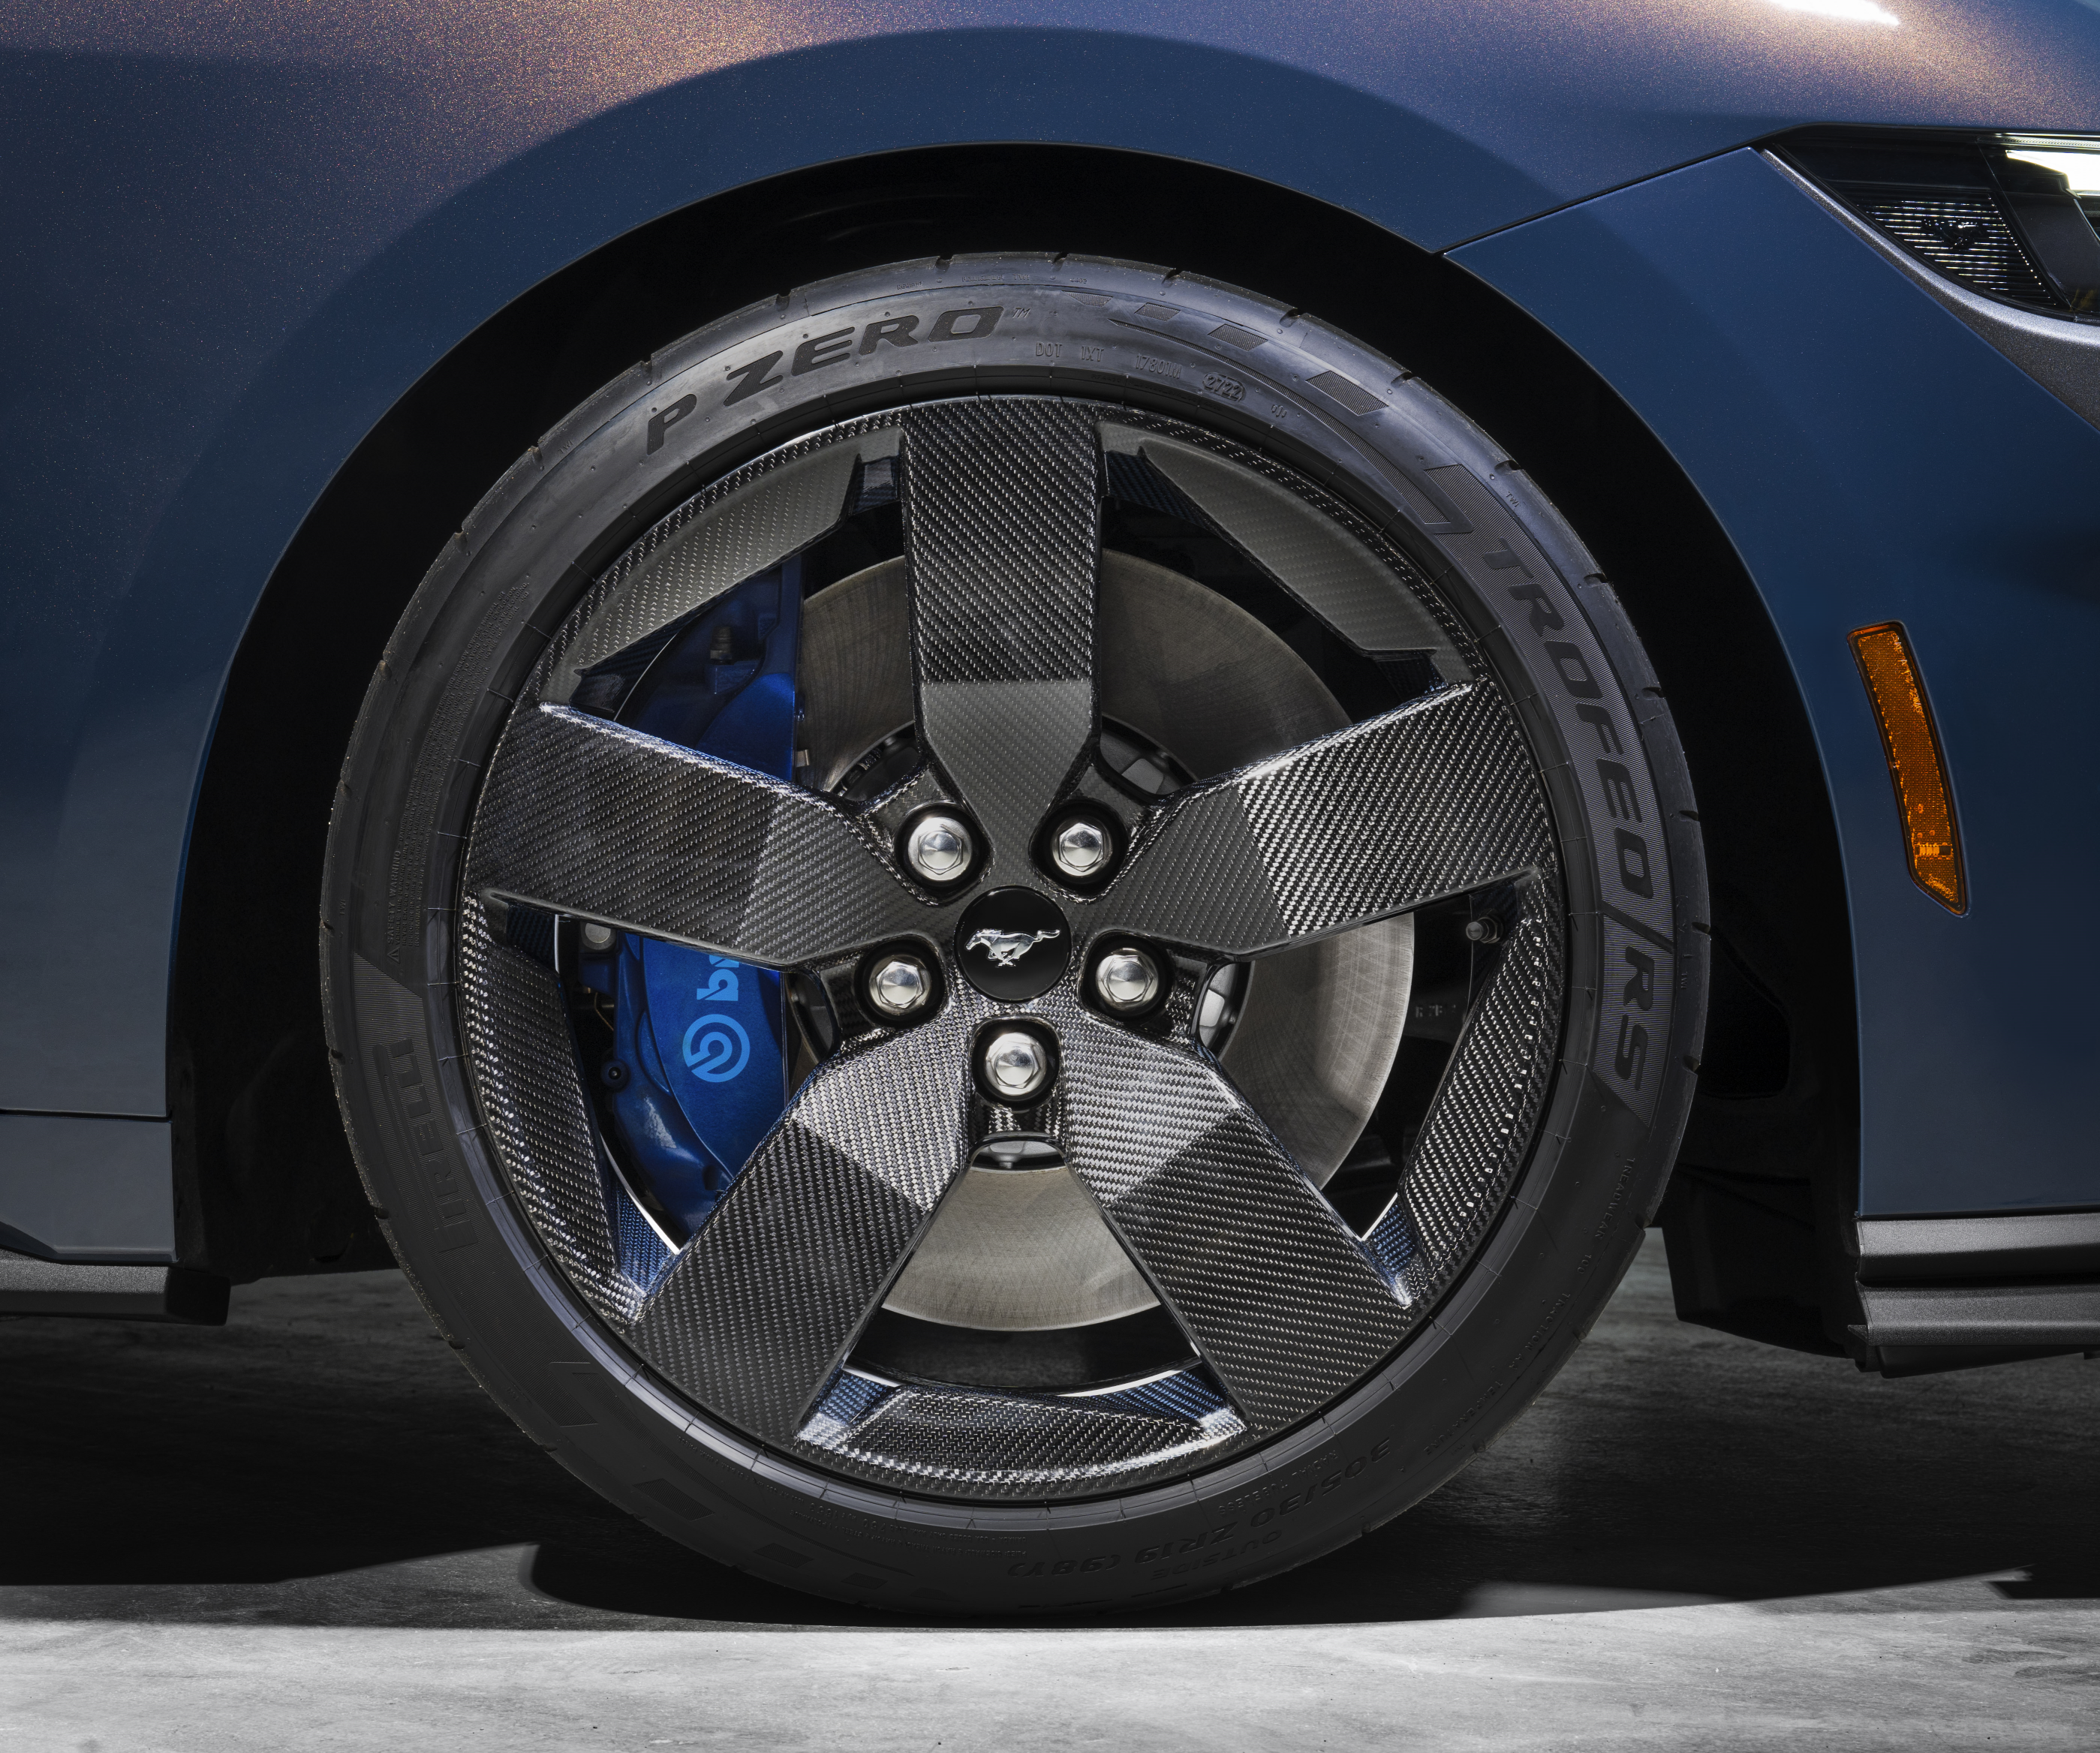 S650 Mustang Dark Horse carbon fiber wheel info & predictions 1676007518029